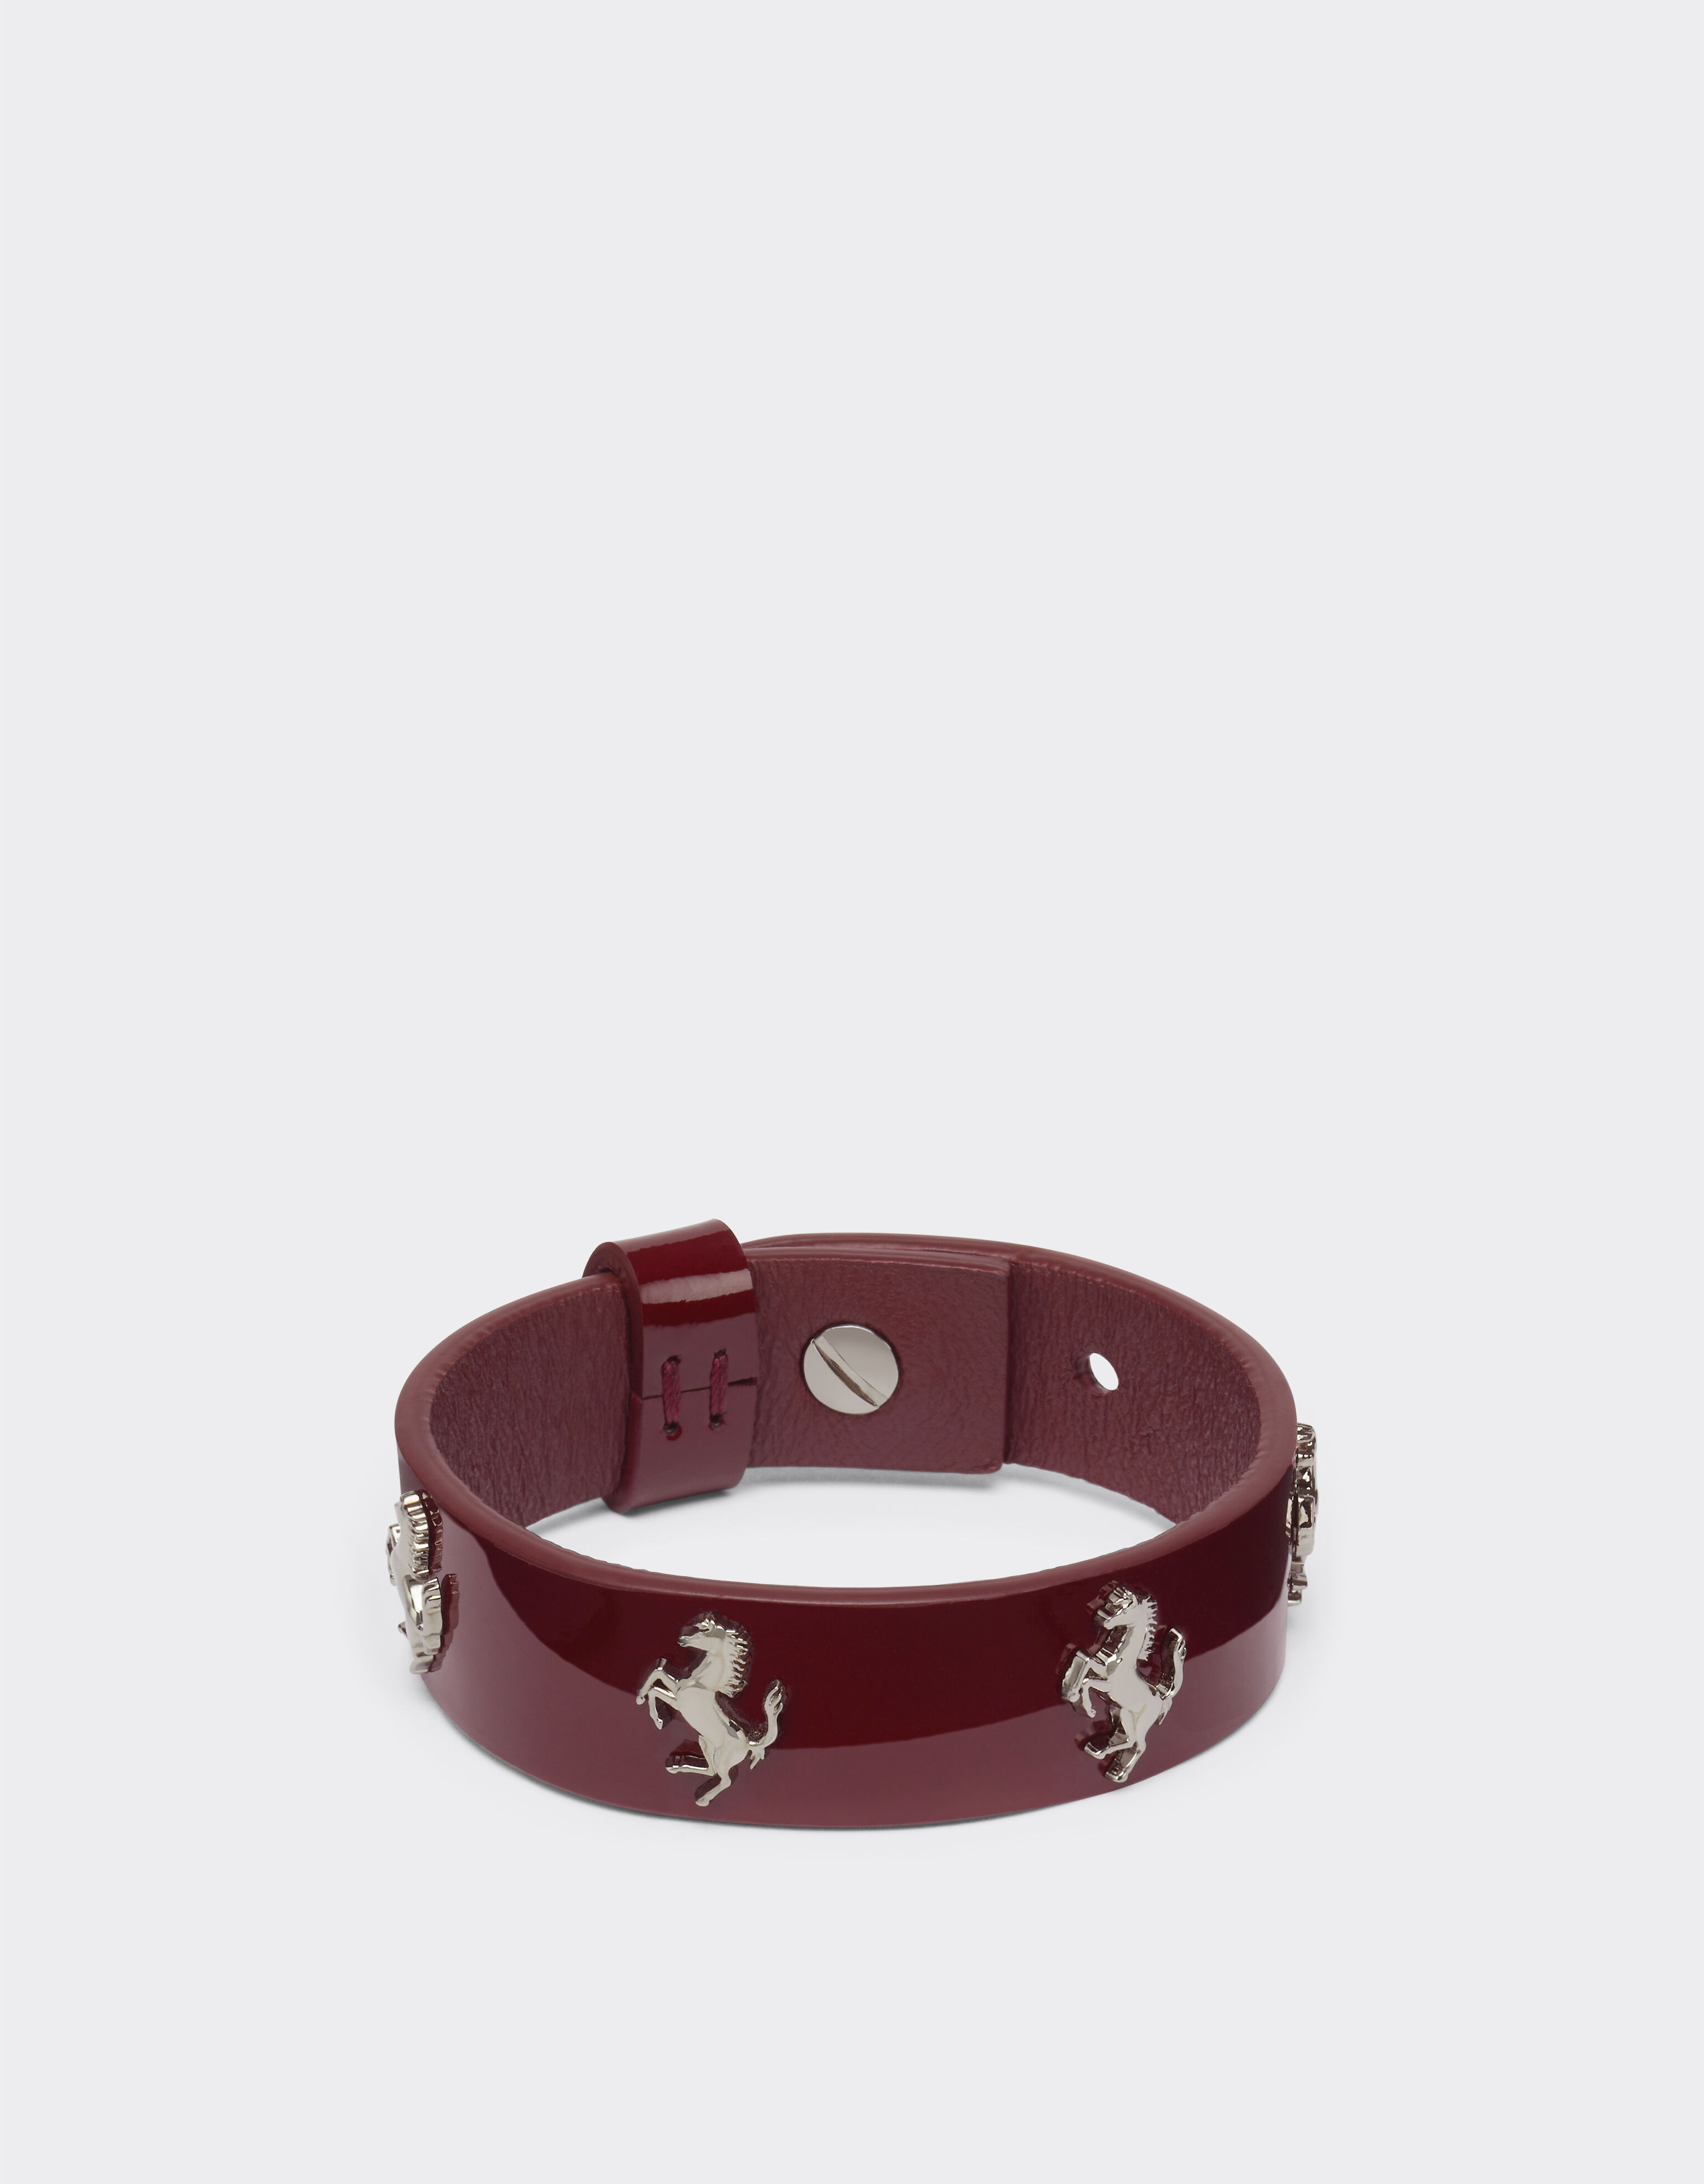 Ferrari Patent leather bracelet with studs Burgundy 20431f